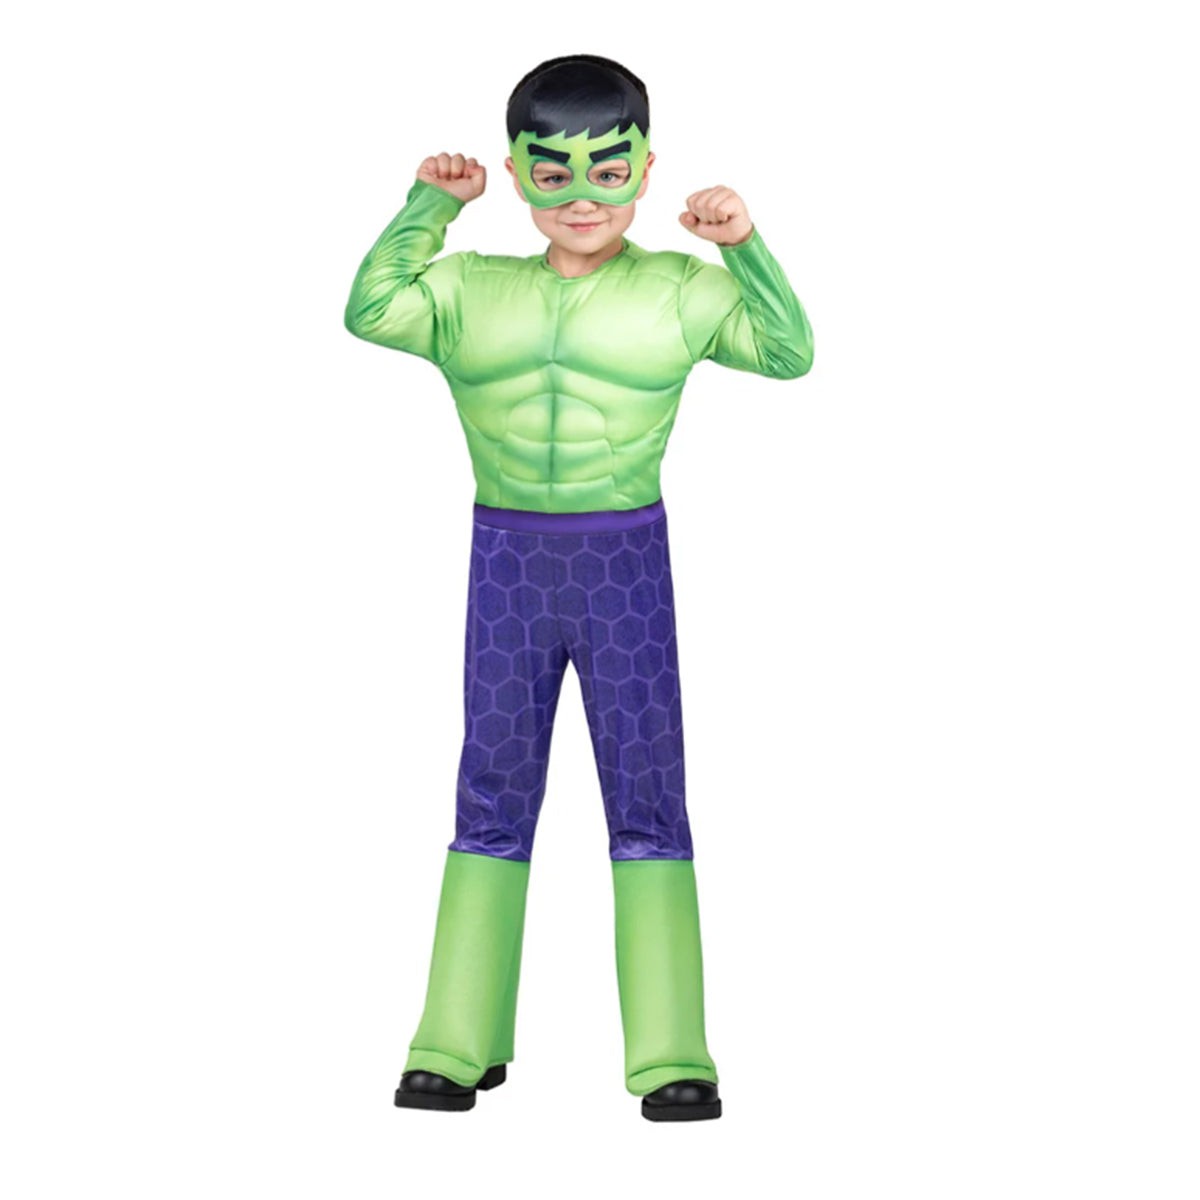 KROEGER Costumes Marvel Avengers The Hulk Costume for Toddlers, Green Padded Jumpsuit 191726457985